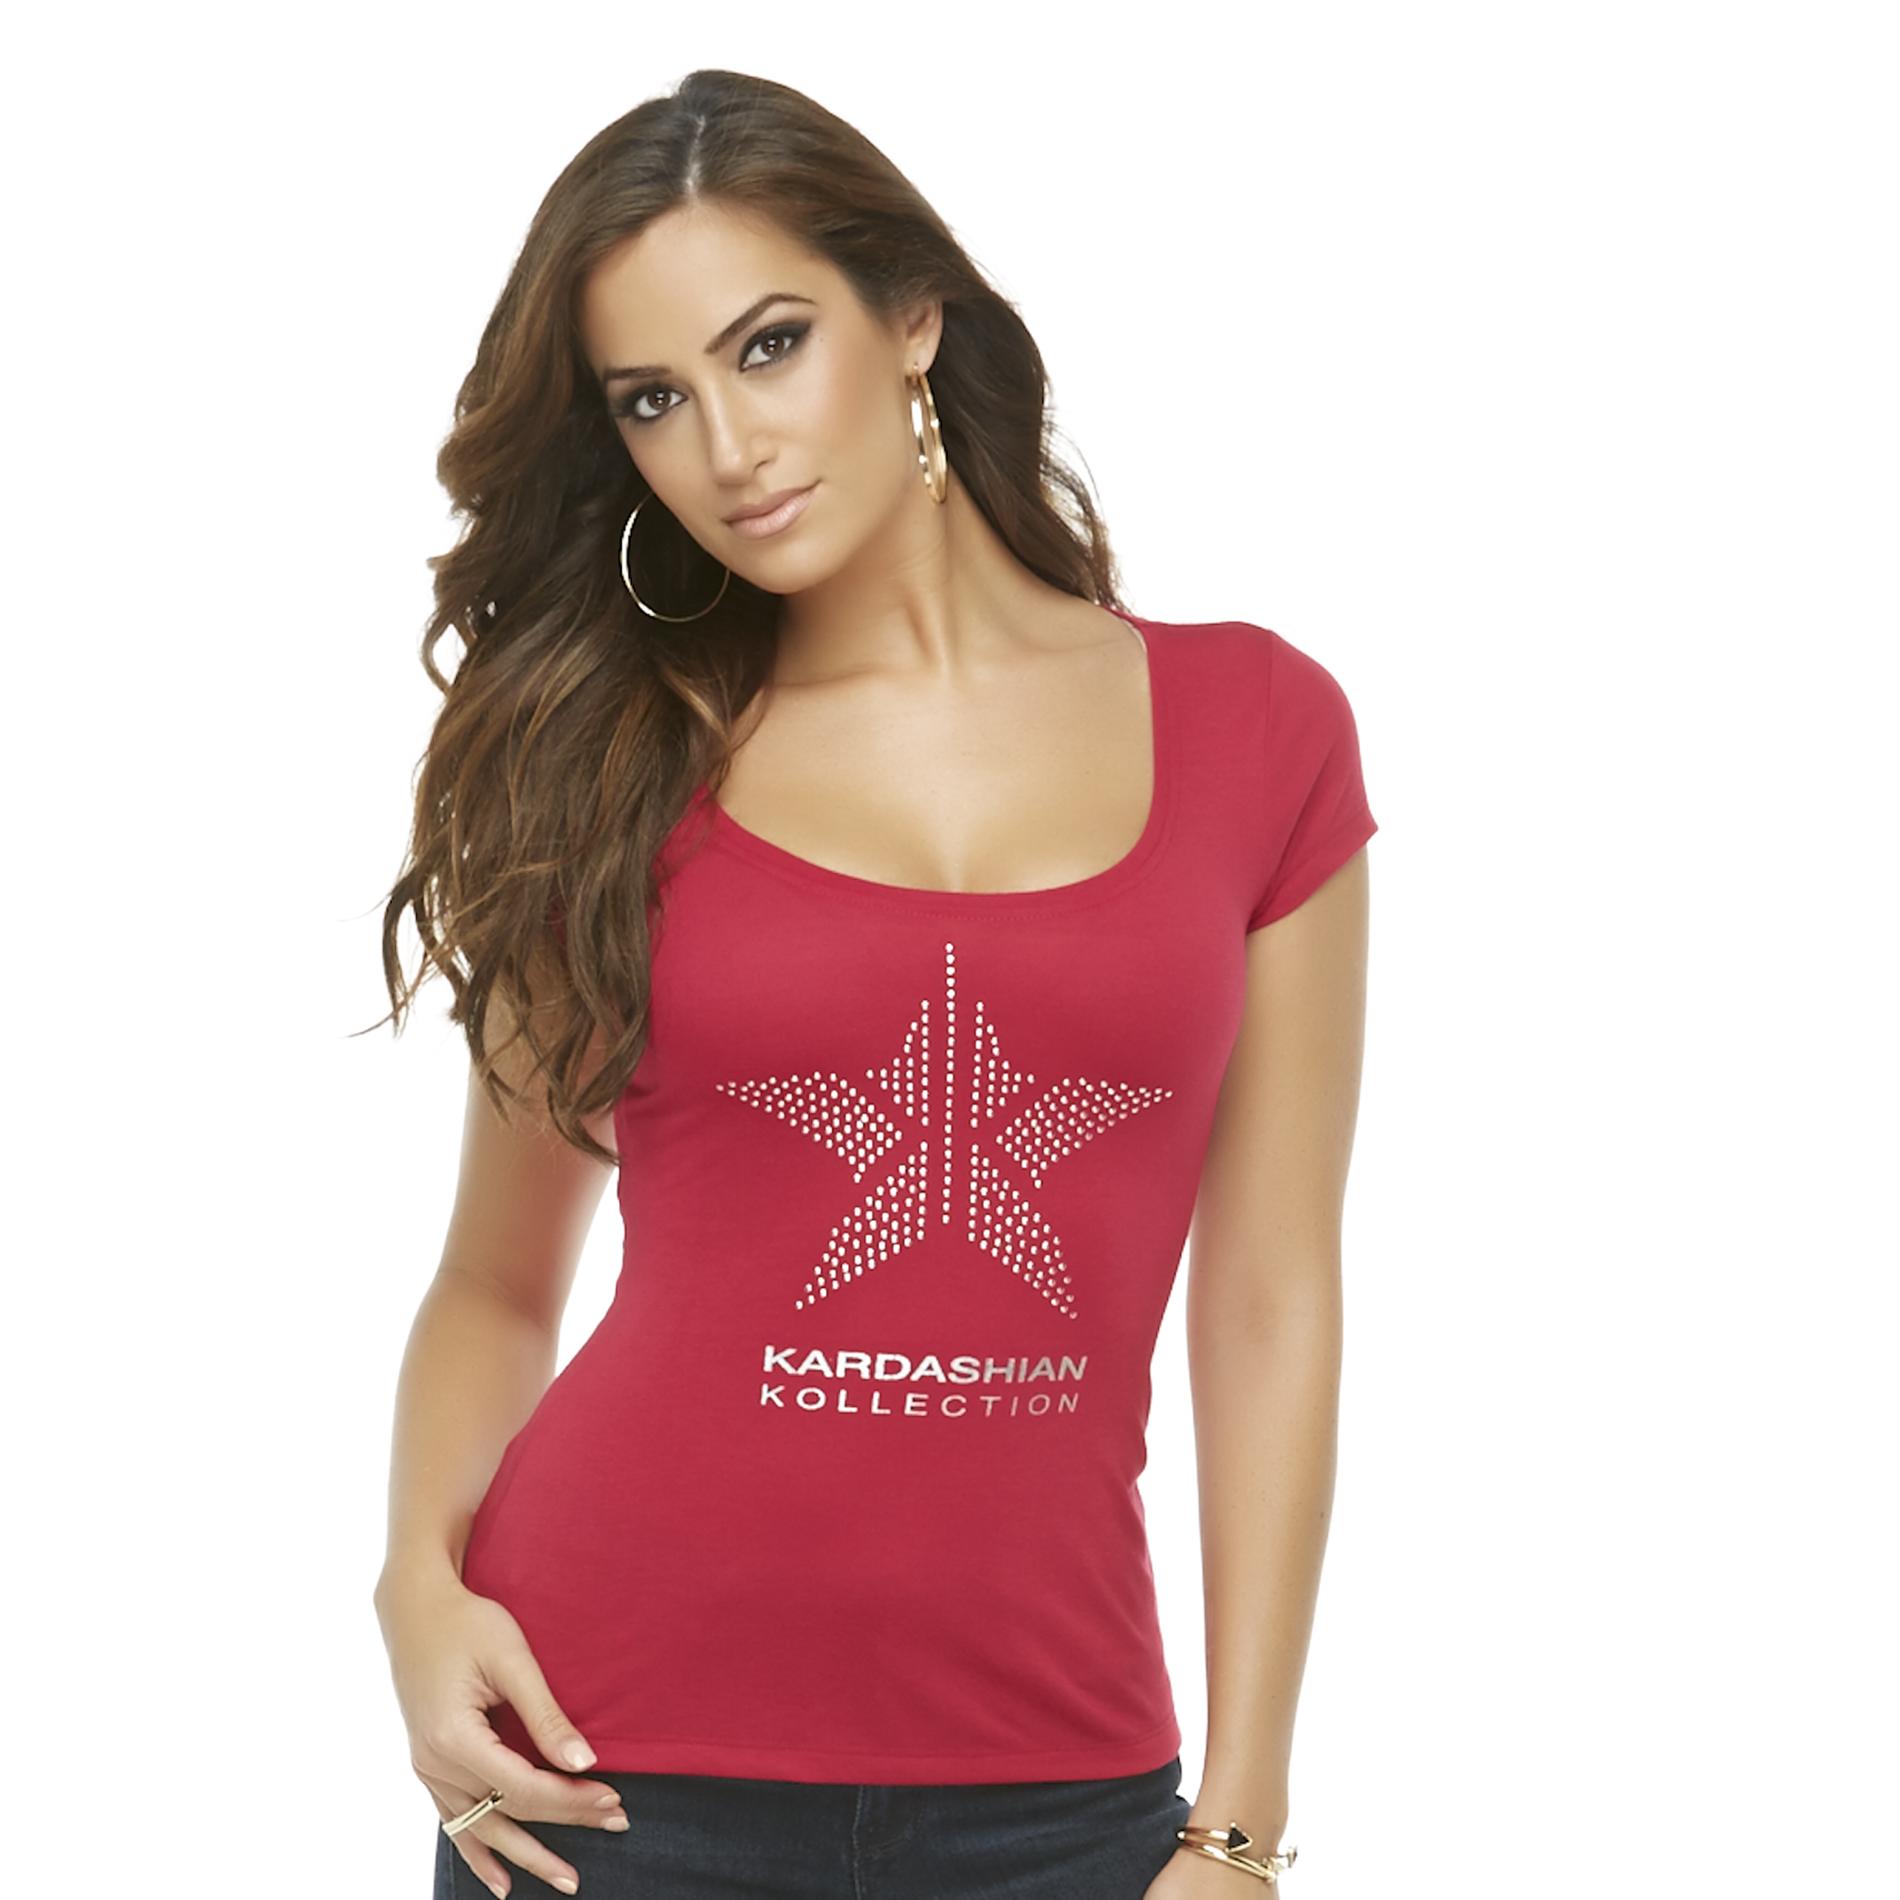 Kardashian Kollection Women's Scoop Neck T-Shirt - Star Logo